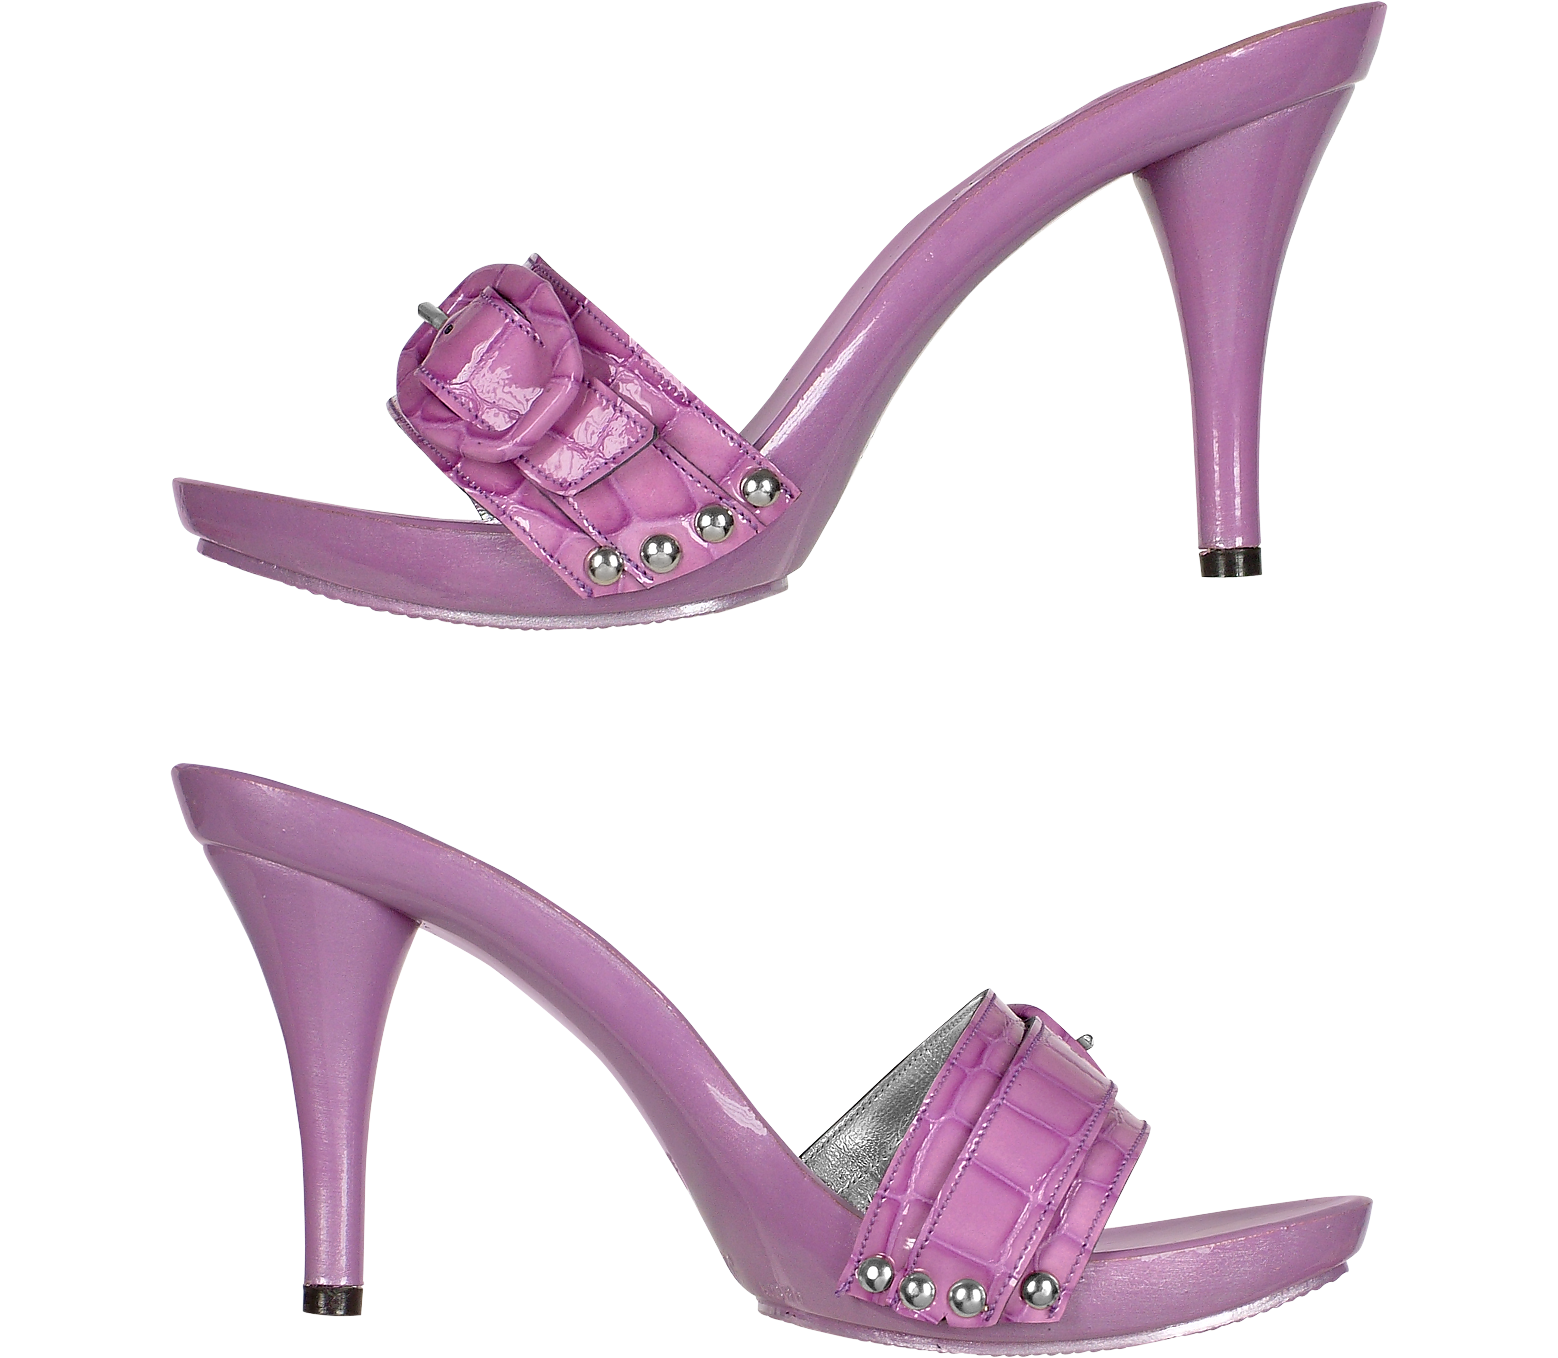 Mascha Buckle Croco Purple Sandal Slide Shoes 6.5 US | 4 UK | 37 EU at ...